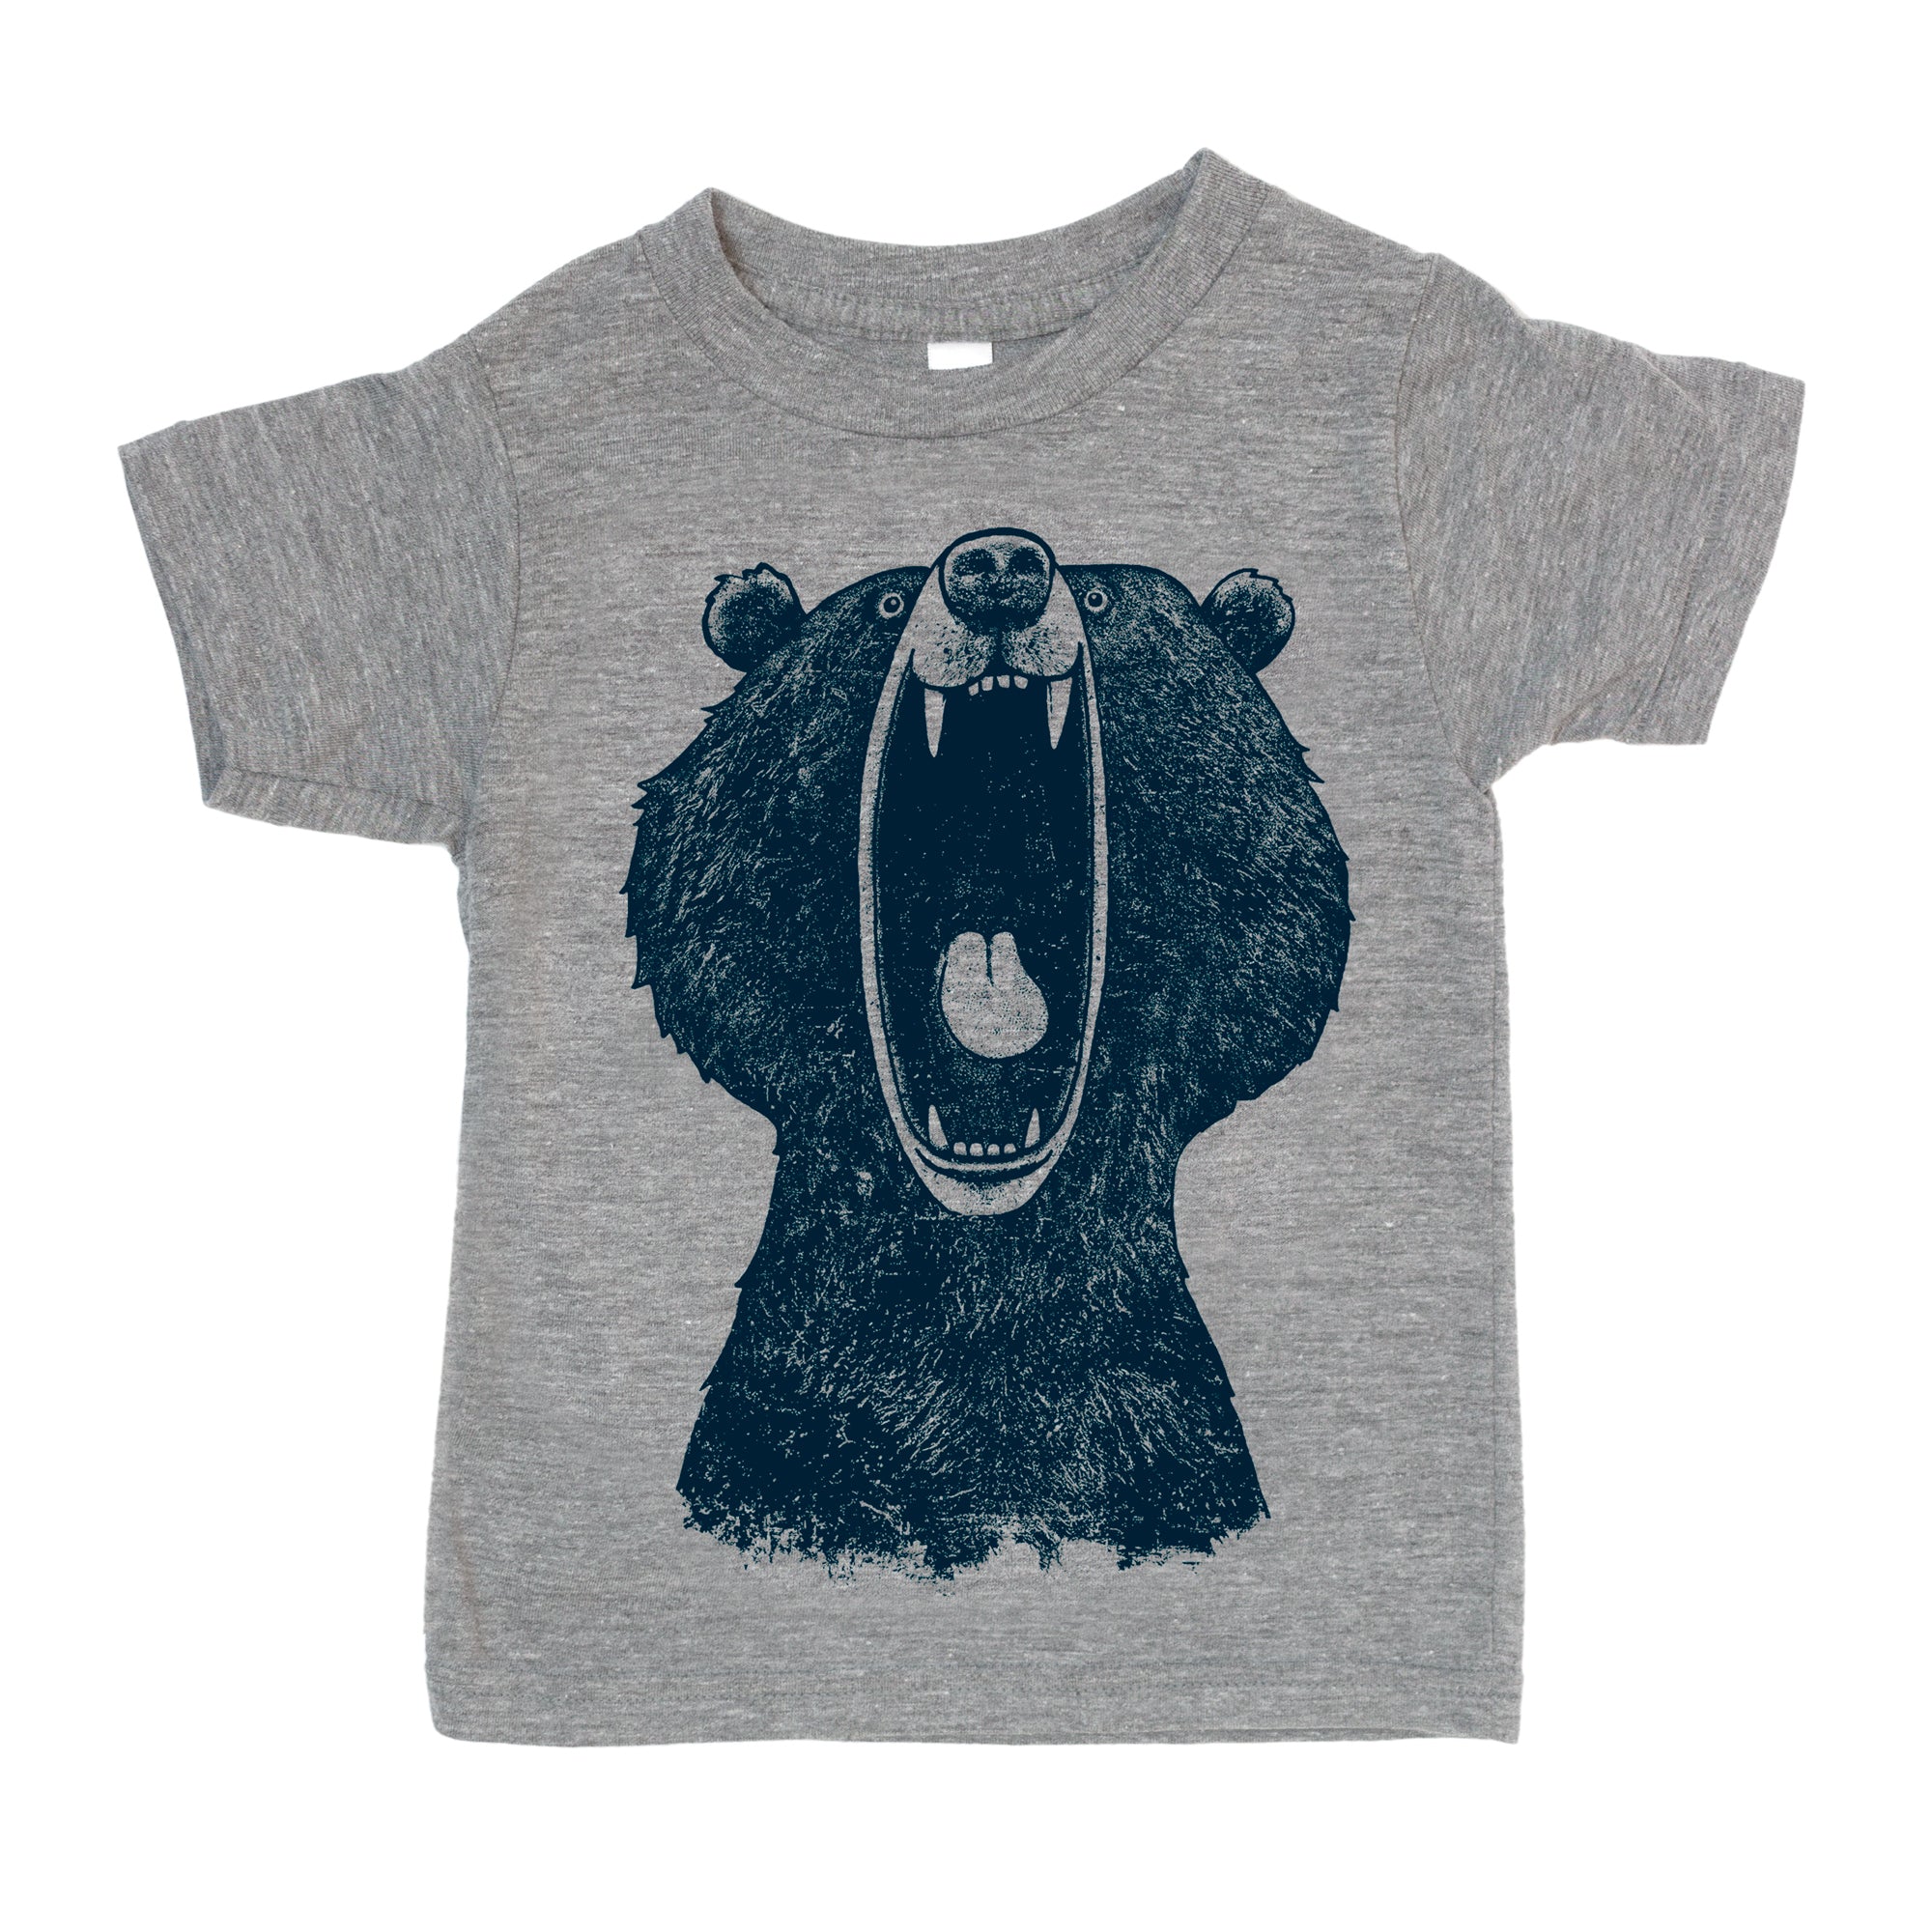 Bear (kids tee)